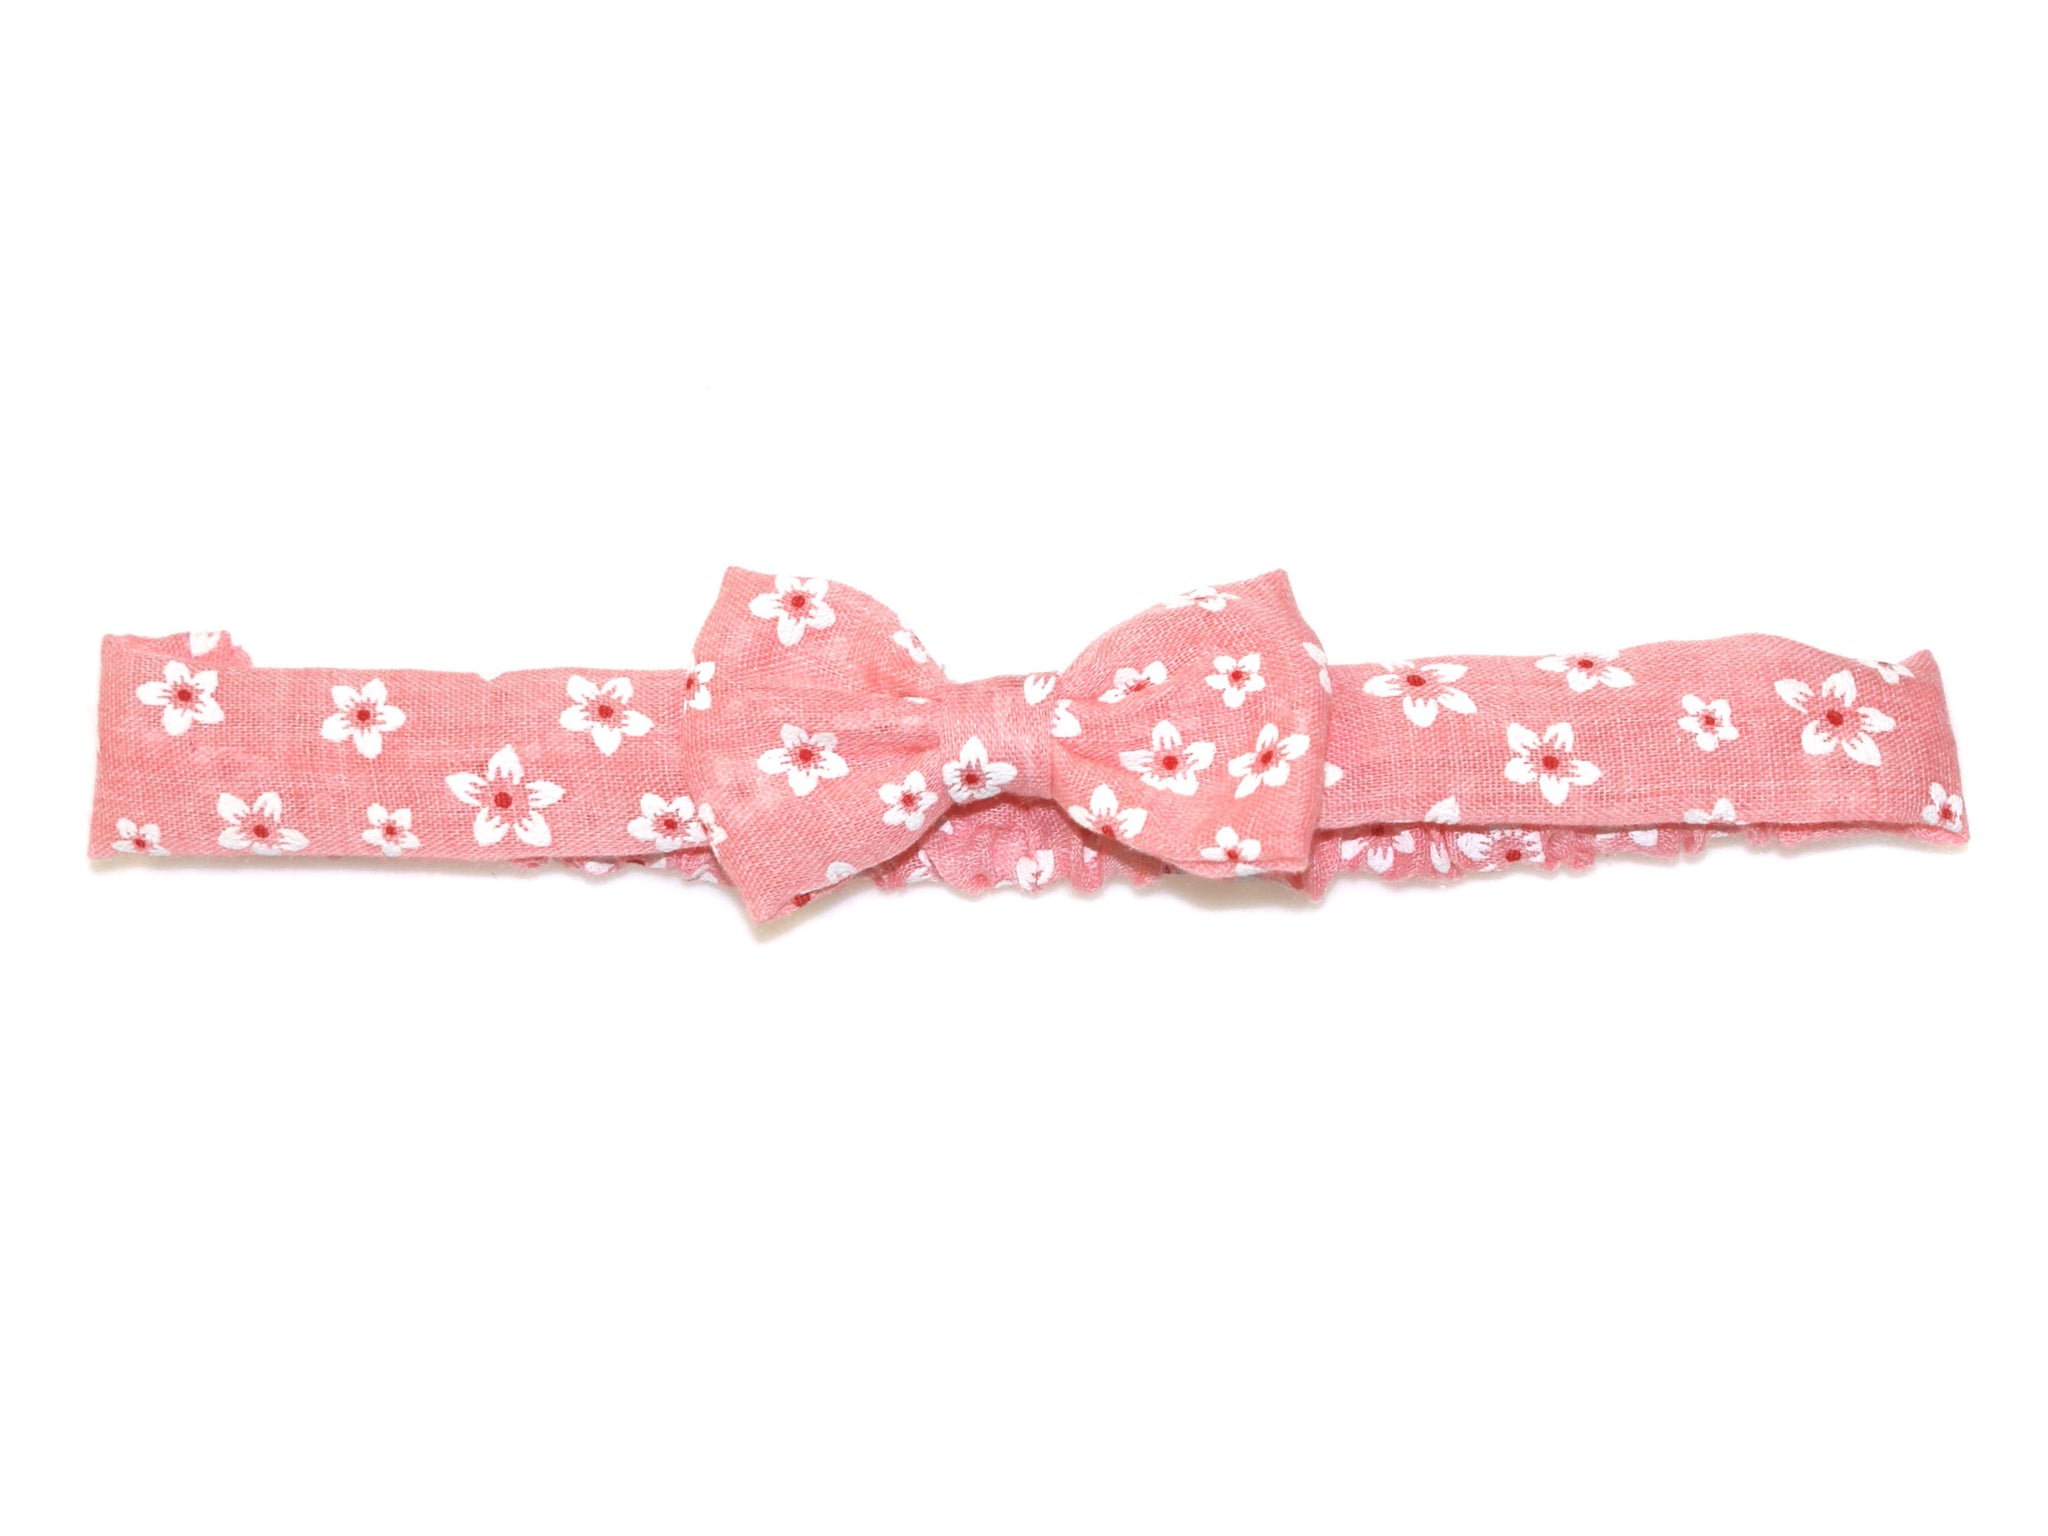 Desert Rose Baby Headband - Pink